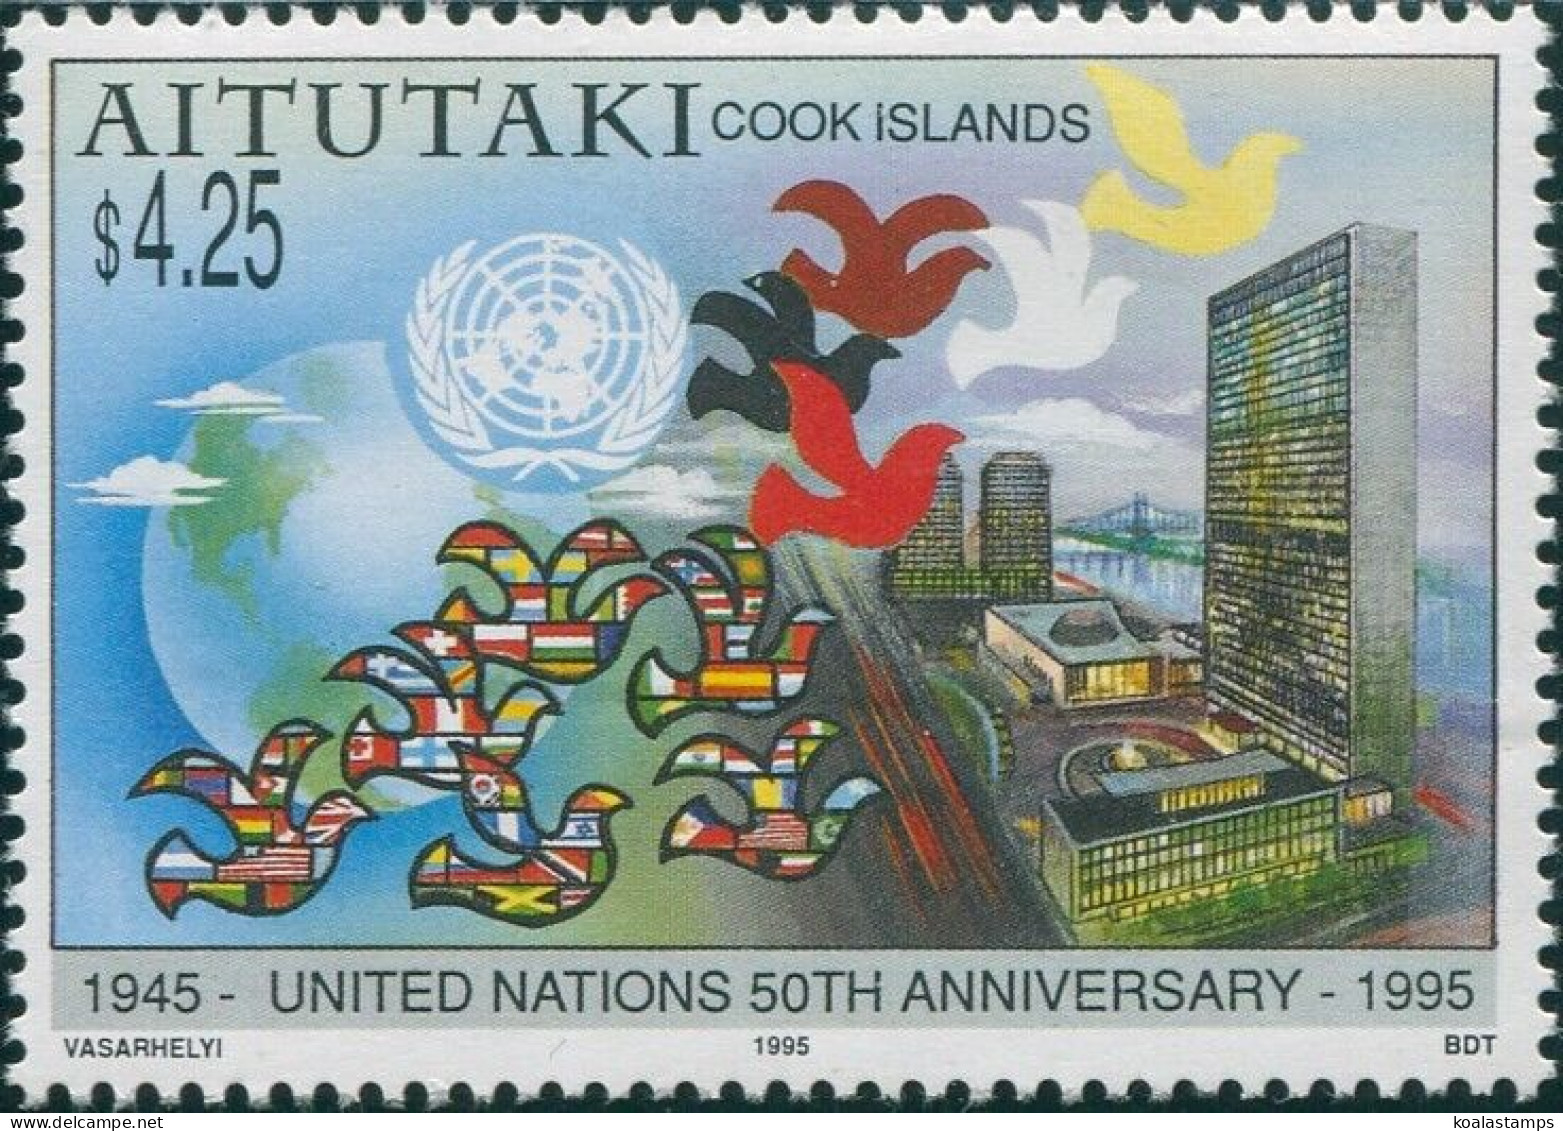 Aitutaki 1995 SG689 $4.25 United Nations MNH - Cook Islands